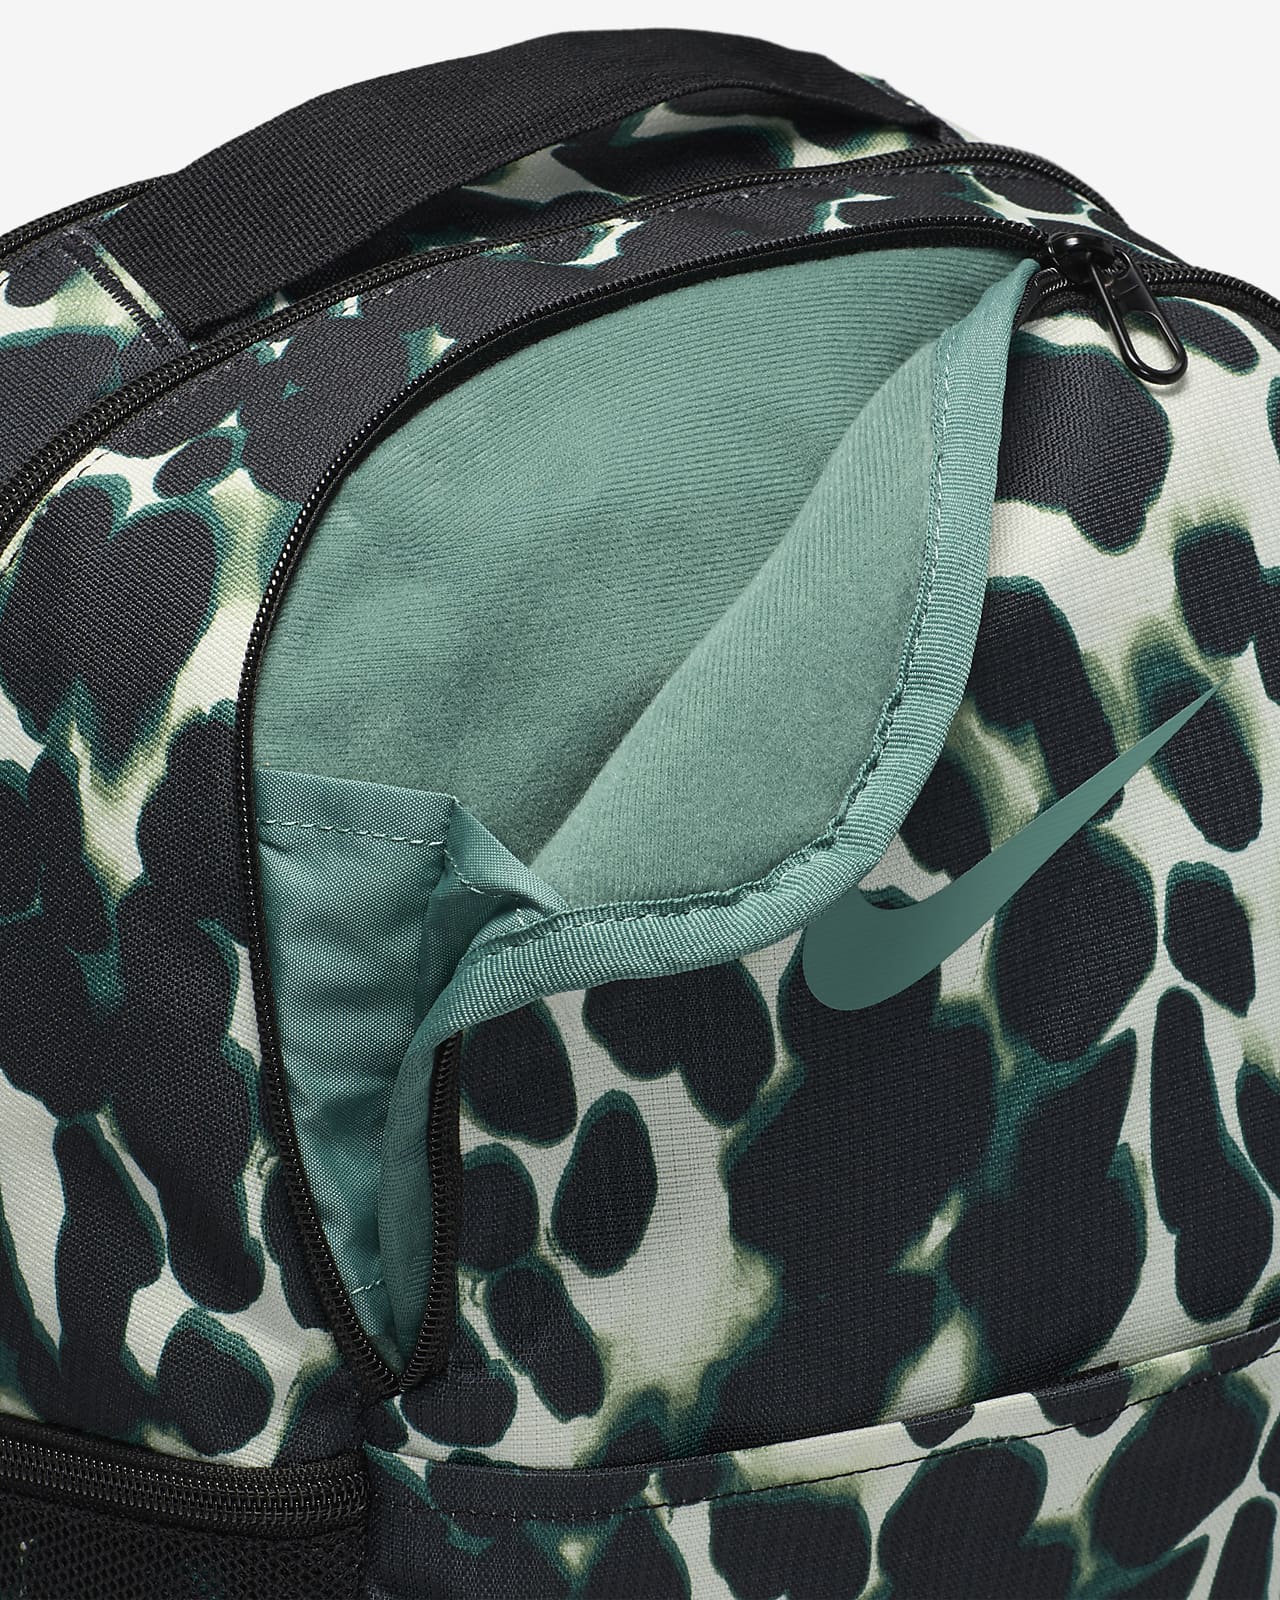 Nike Brasilia Varsity Laptop Backpack